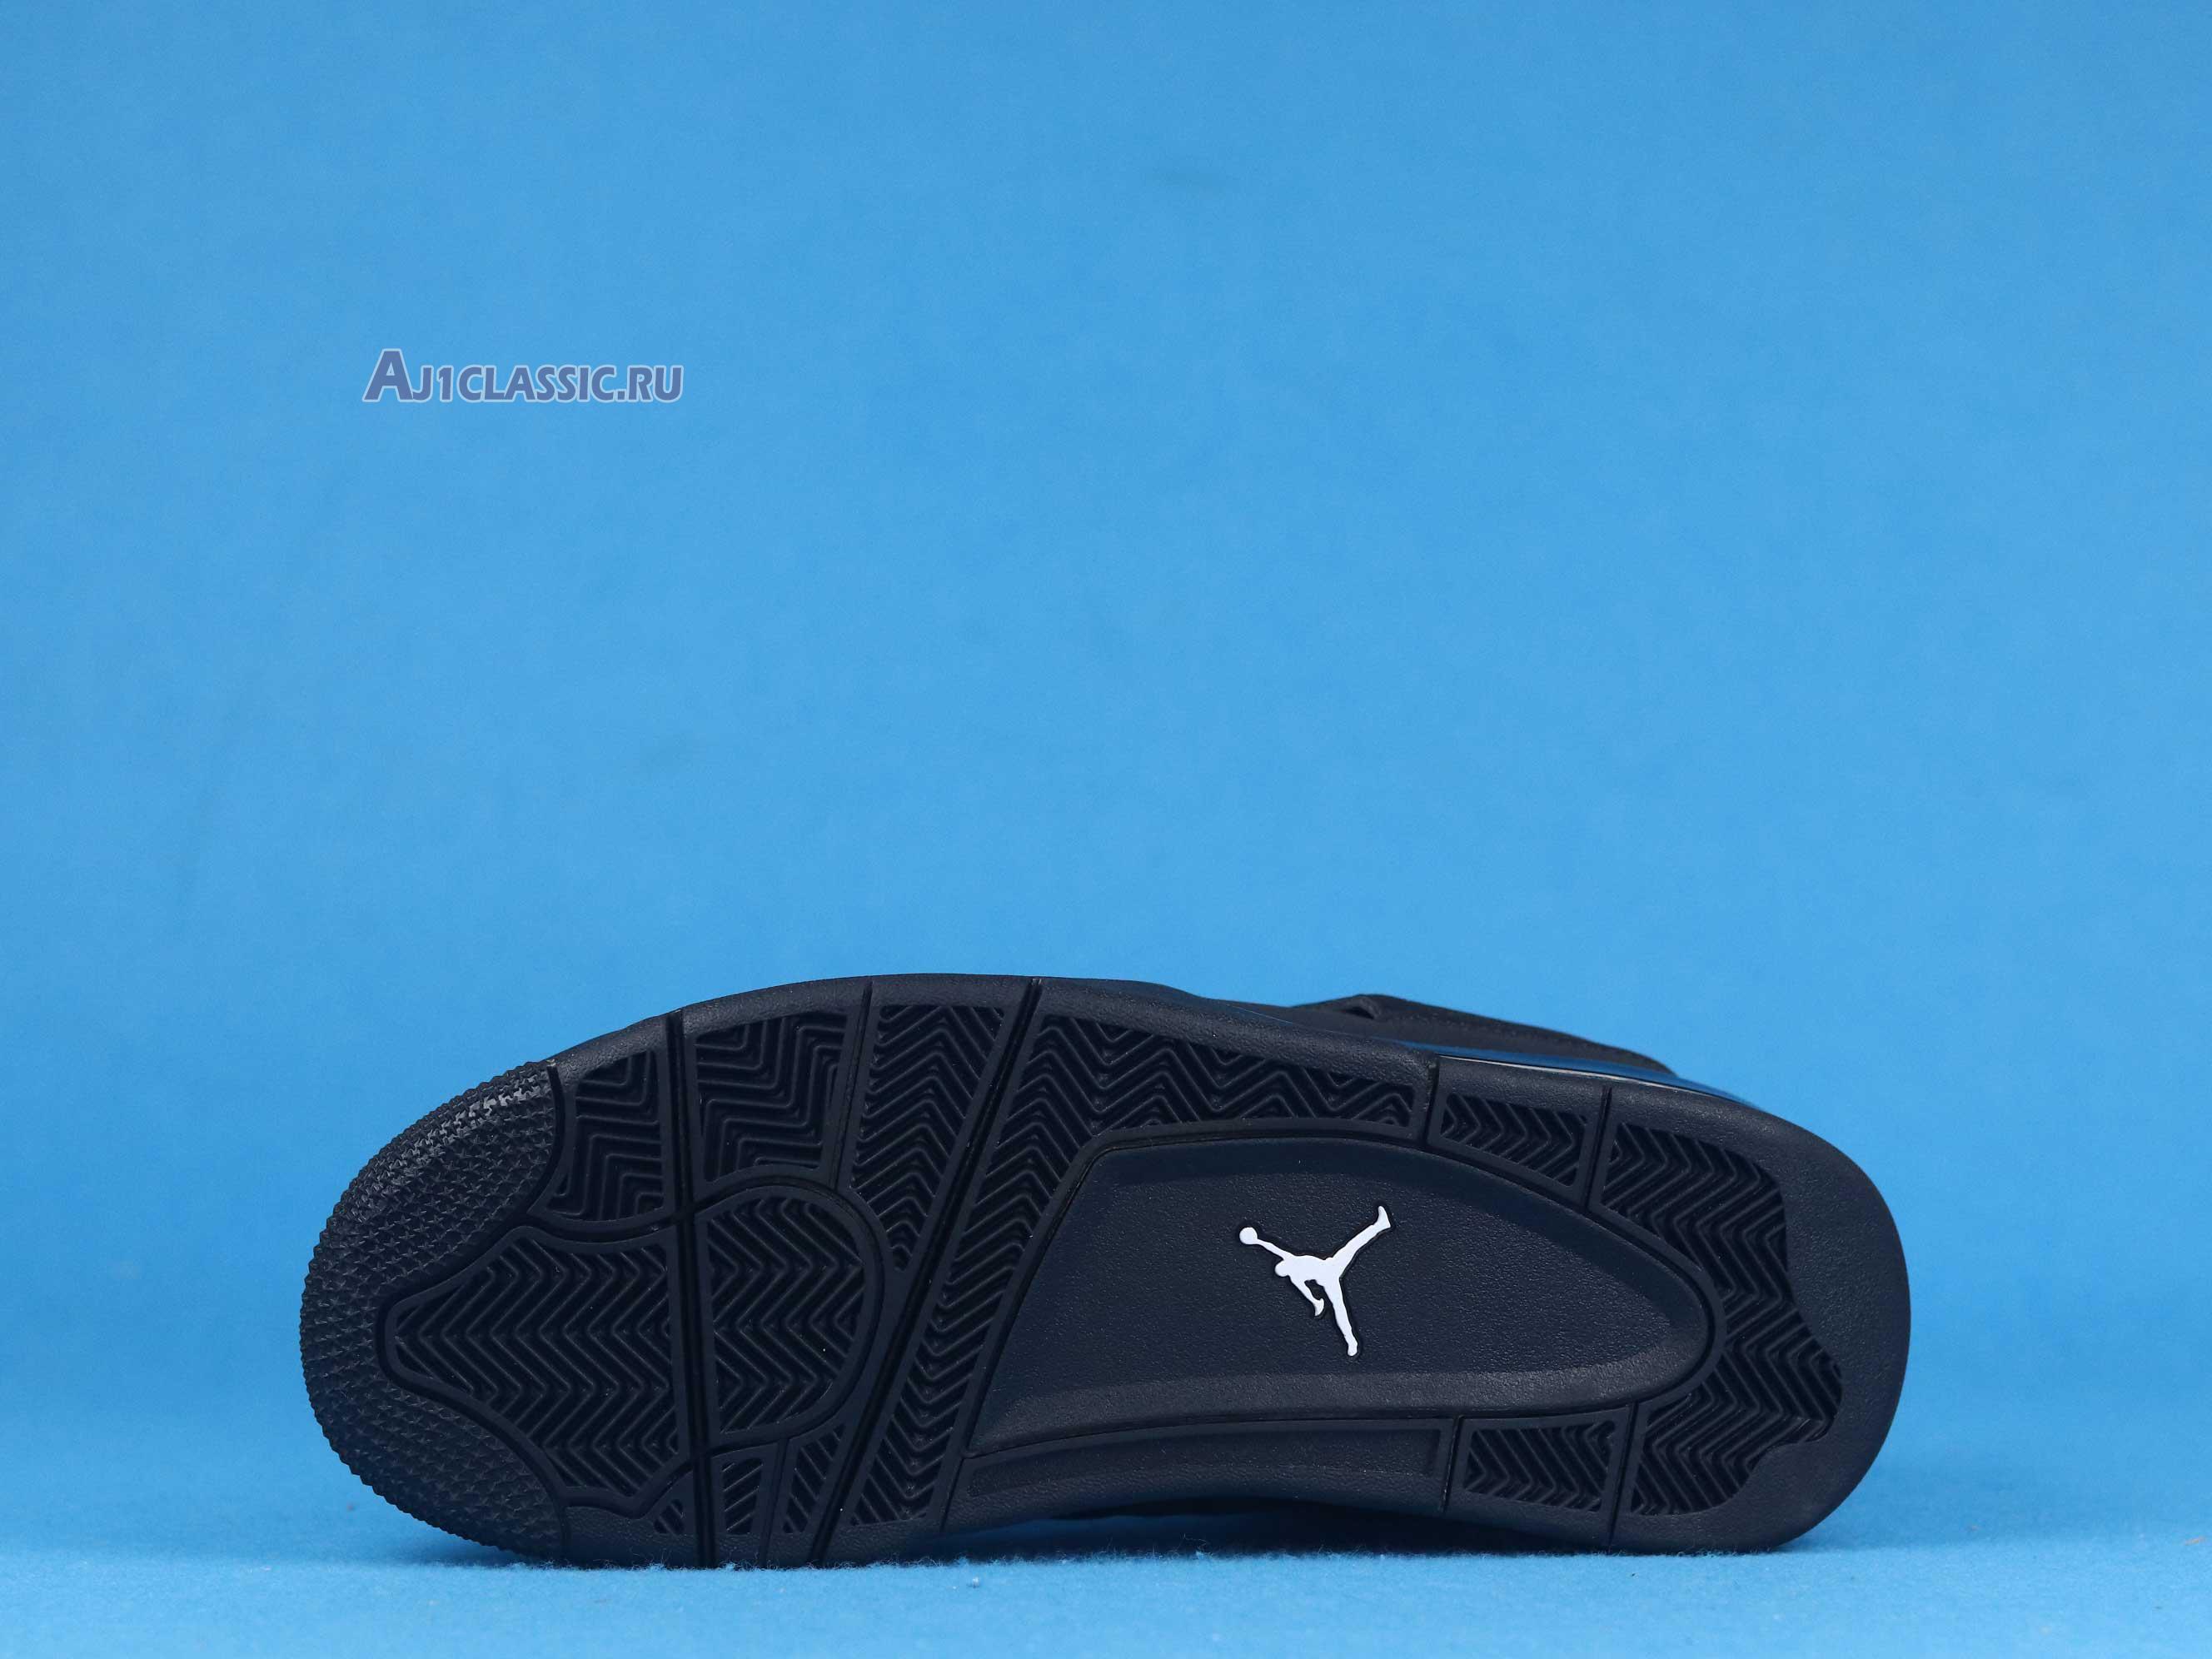 Air Jordan 4 Retro "Black Cat 2020" CU1110-010